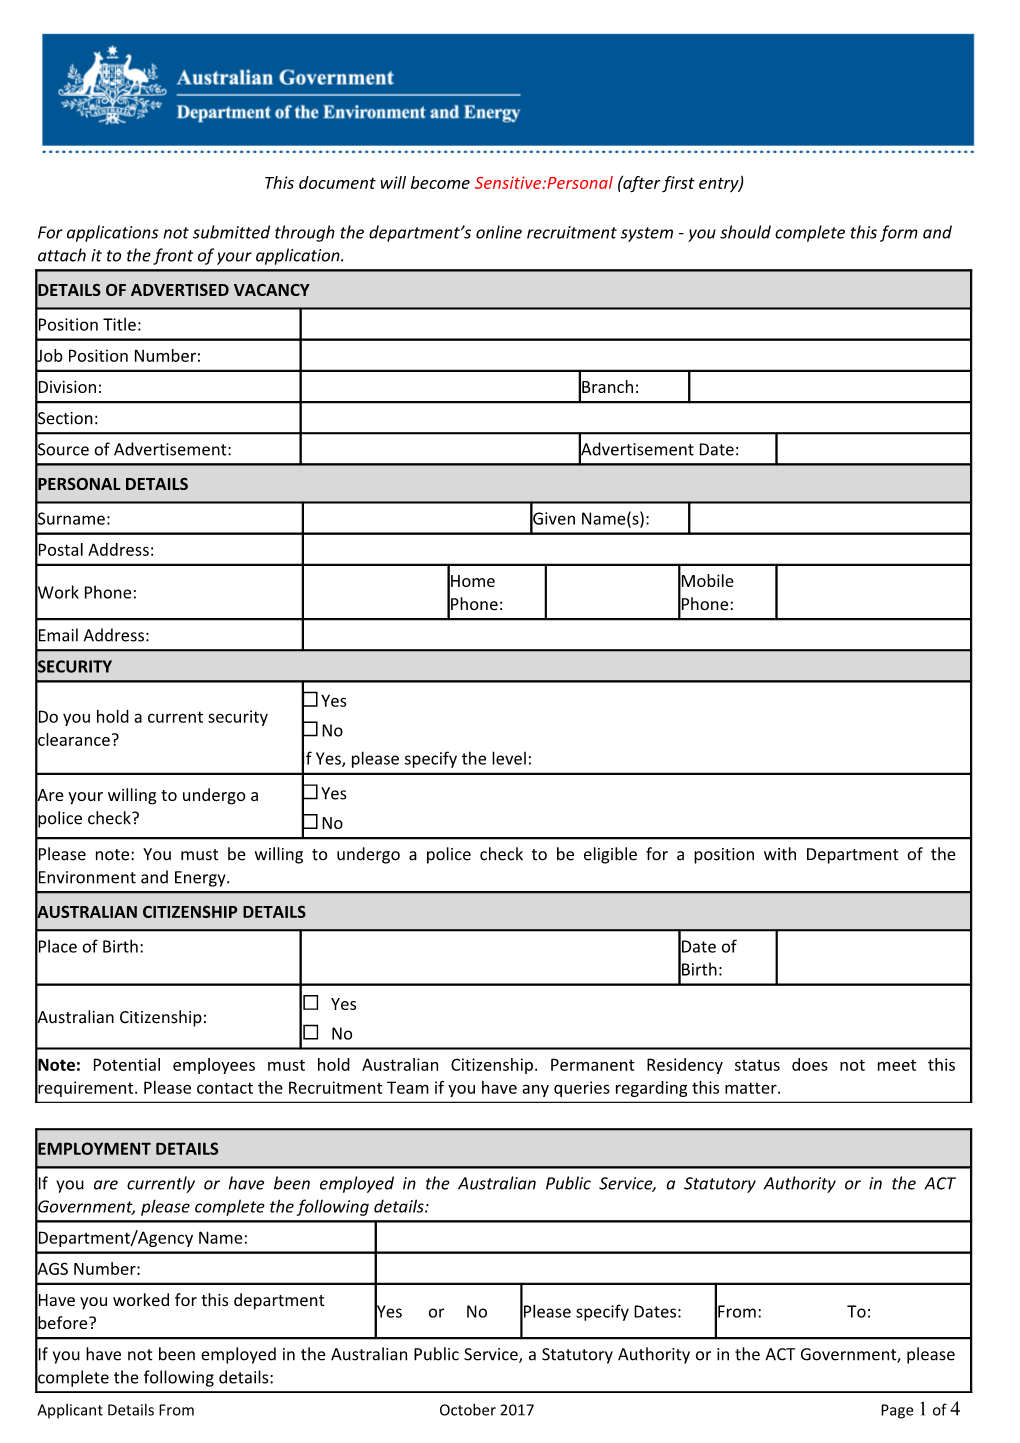 Applicant Details Form